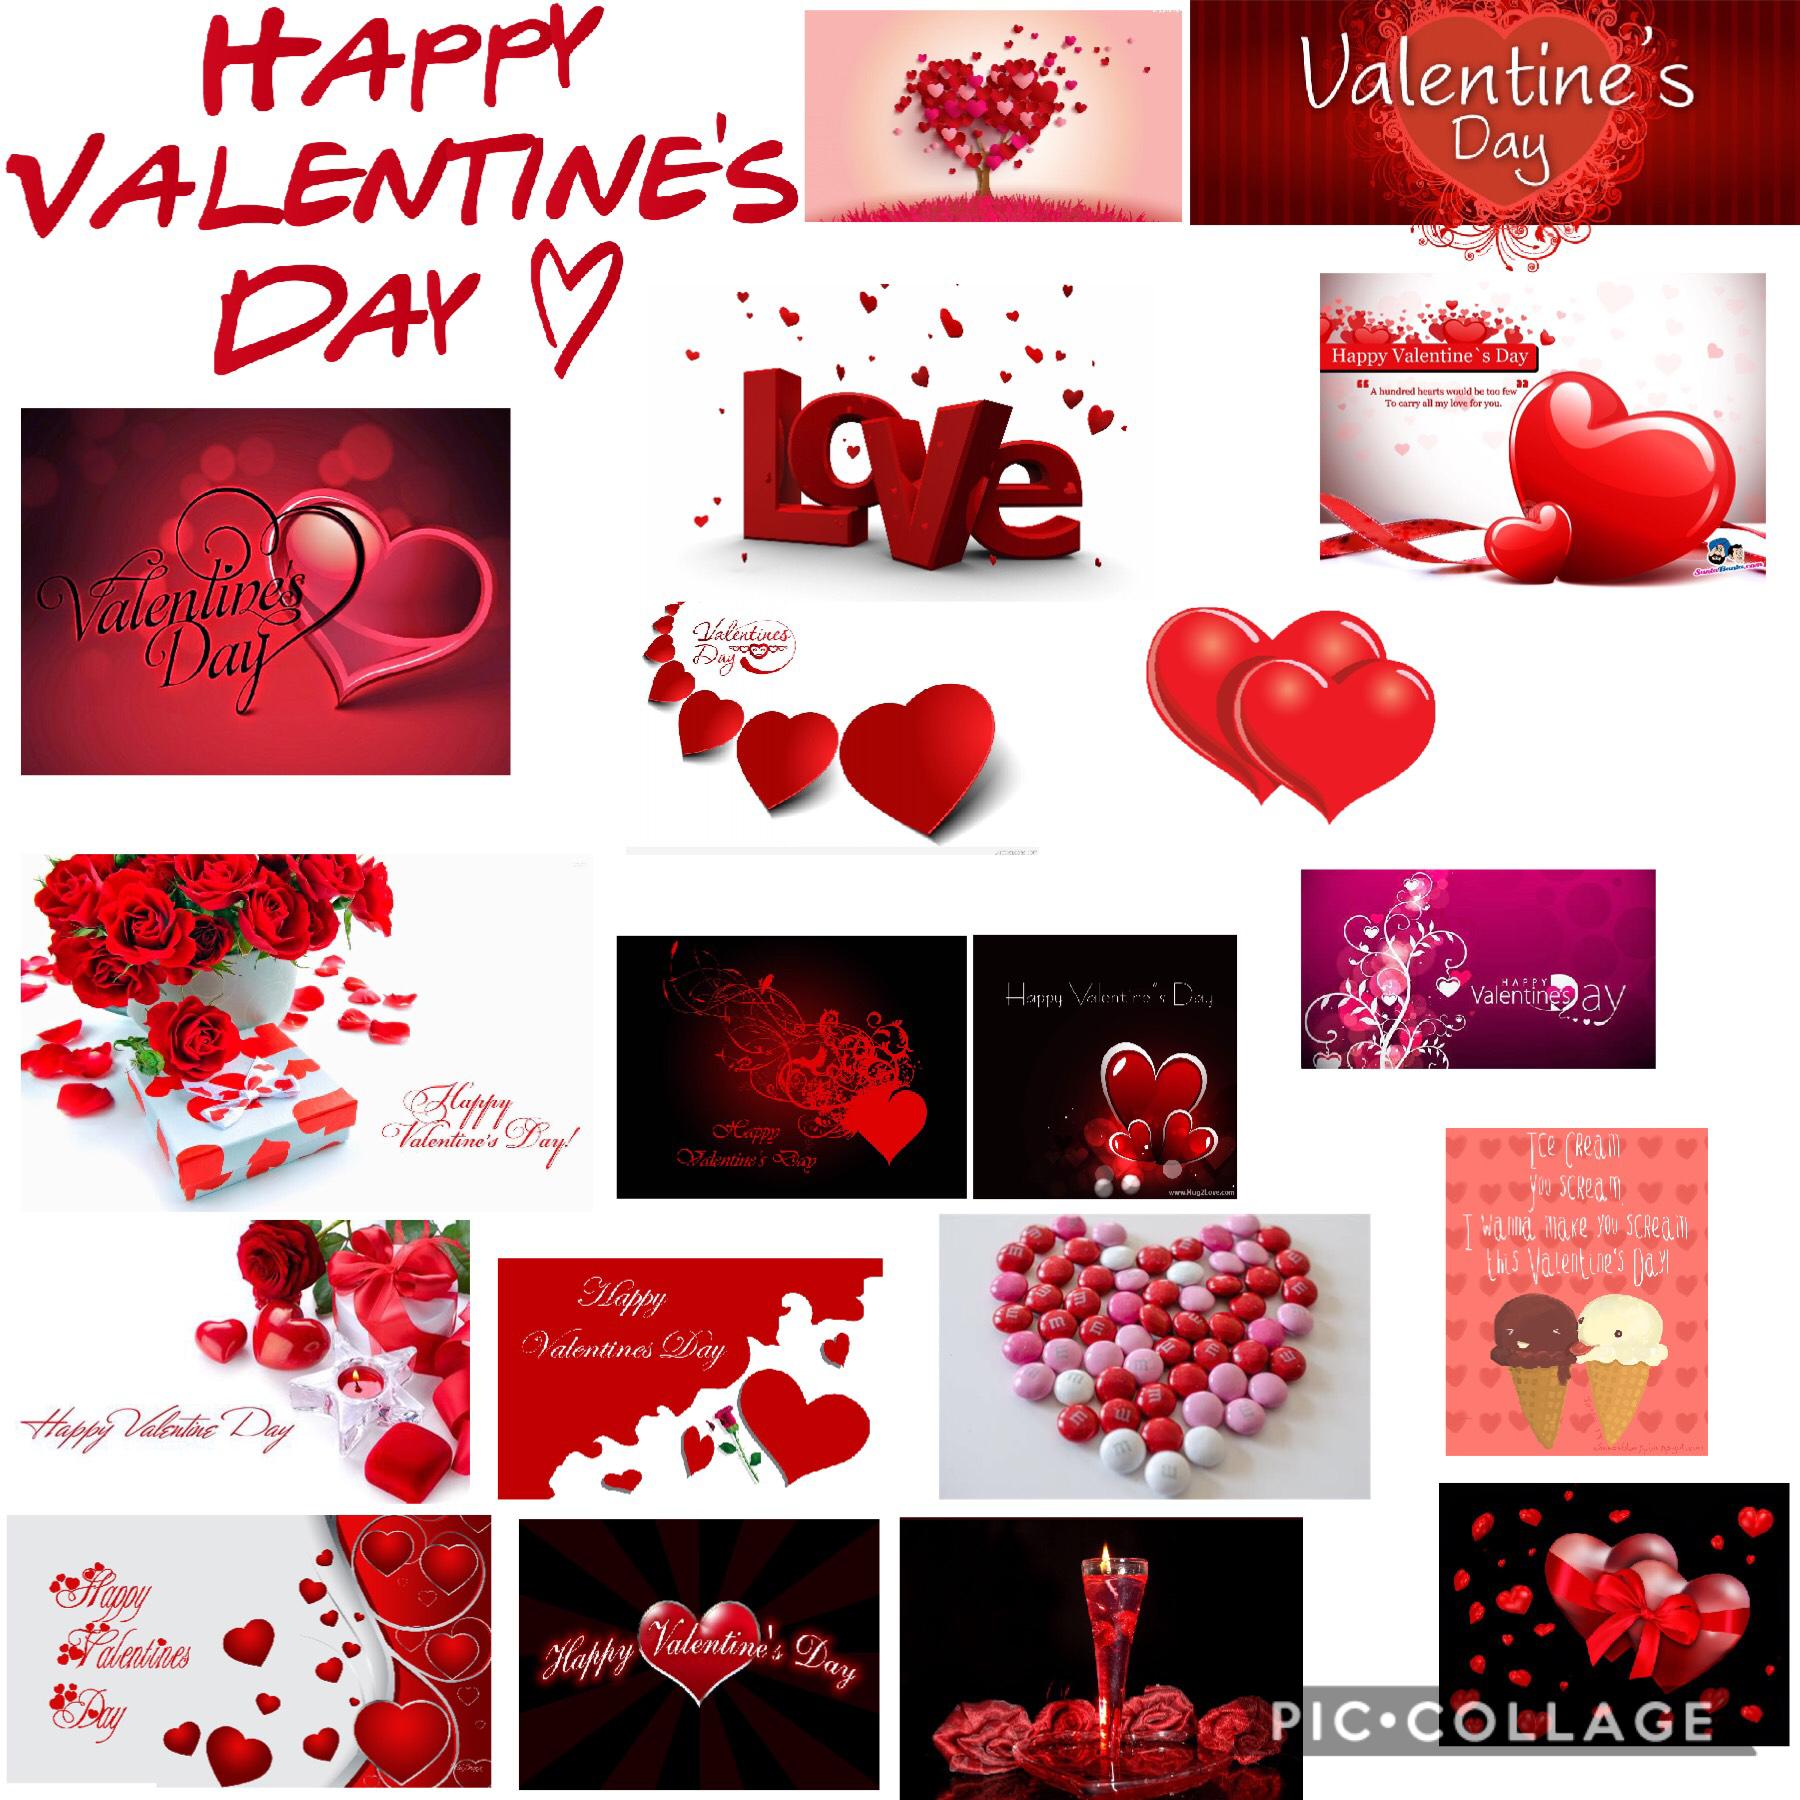 I love Valentine’s Day 